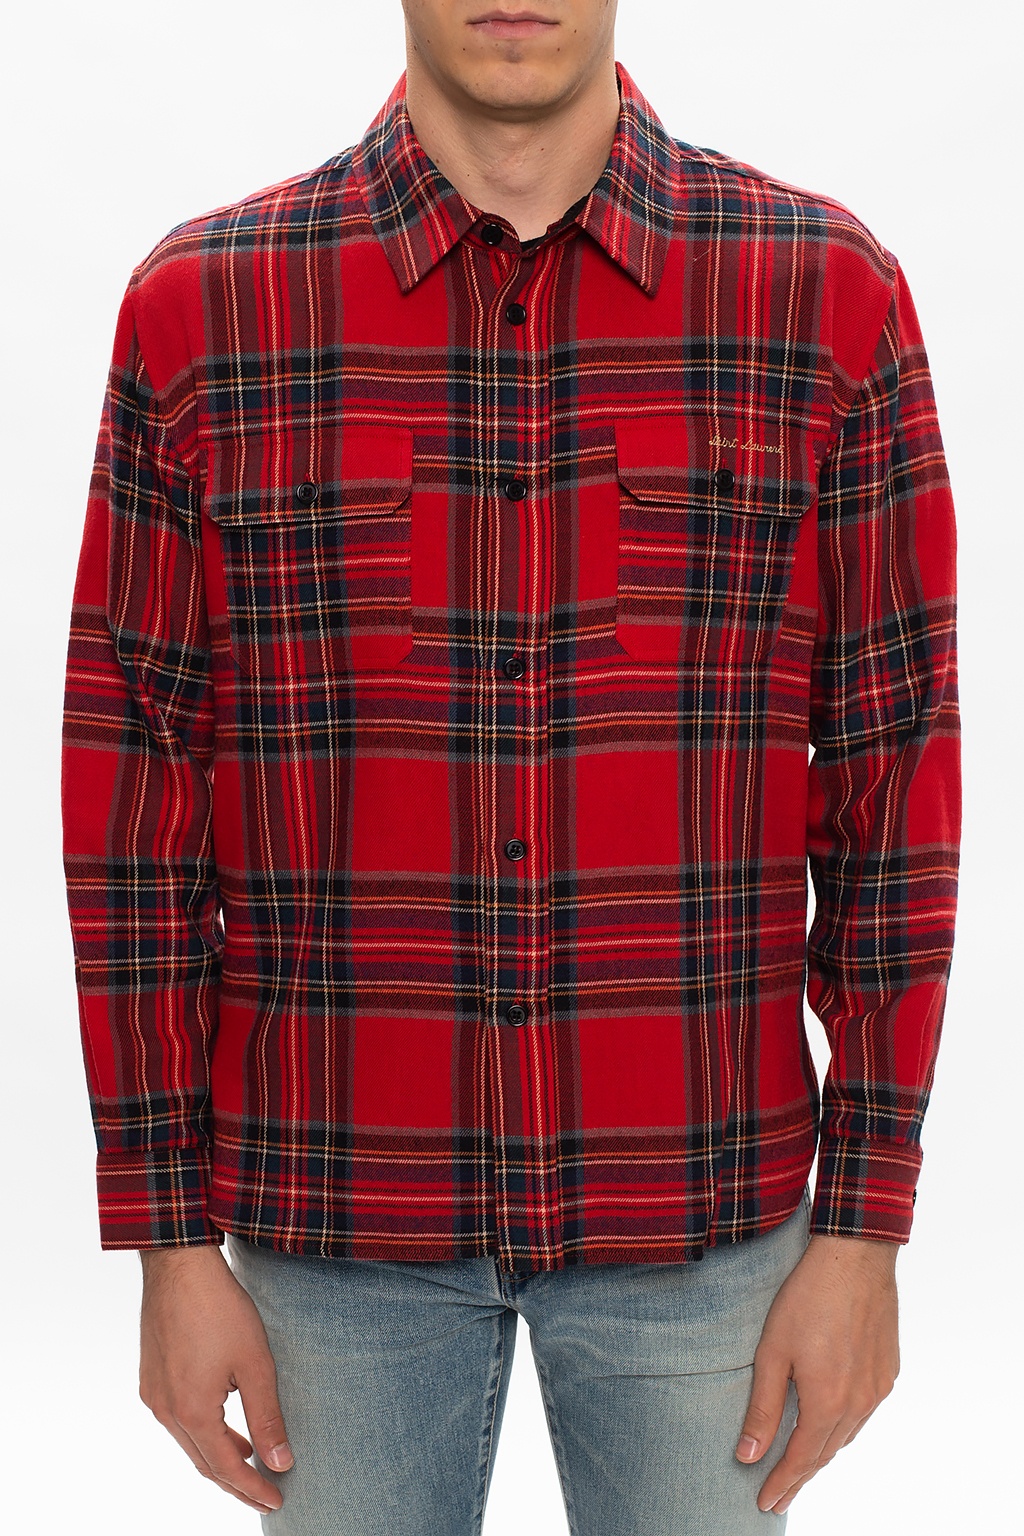 IetpShops Germany - Checked shirt Saint Laurent - wool blazer with 